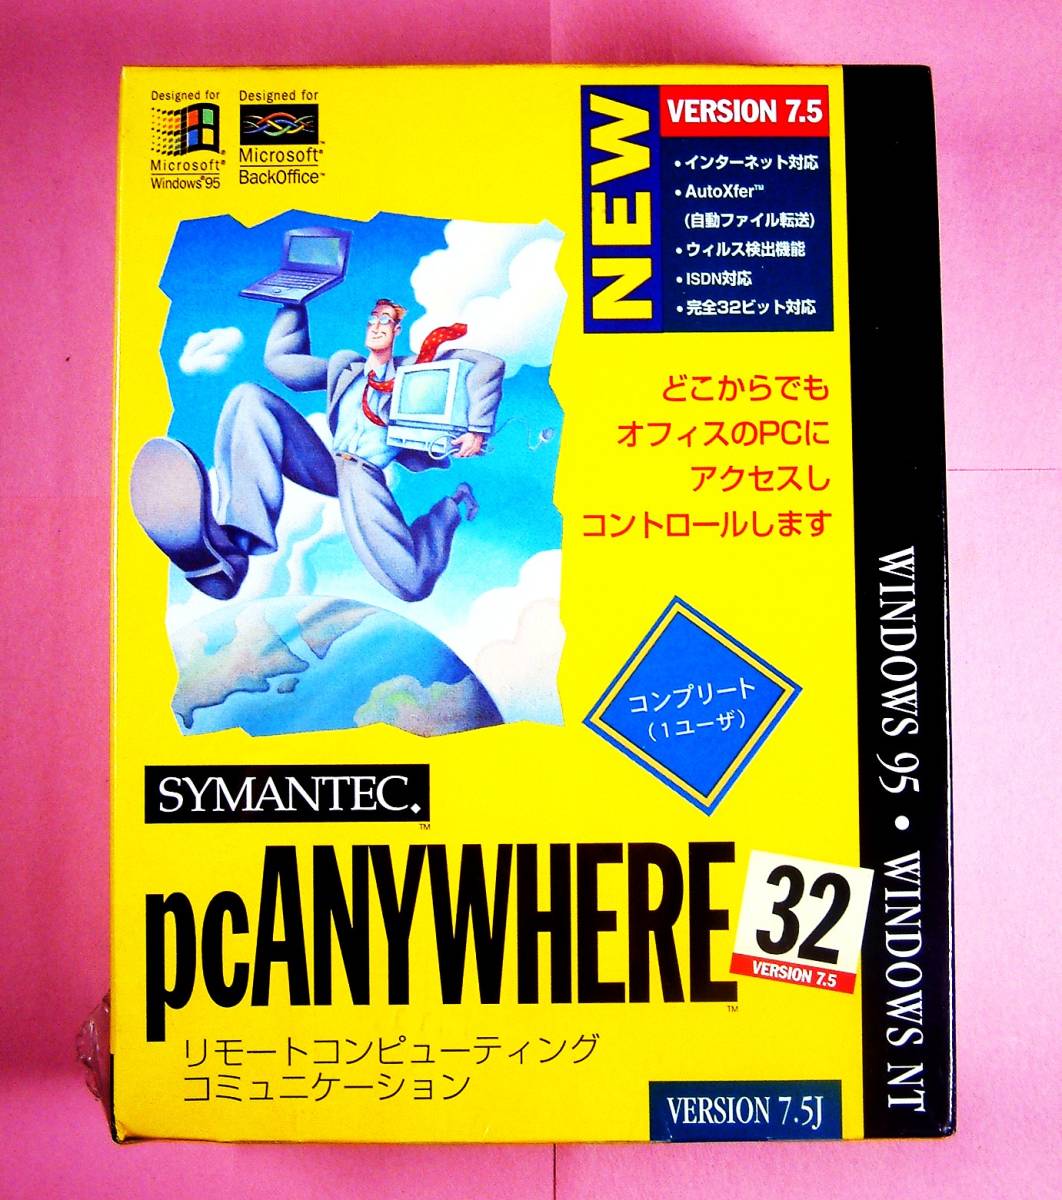 【3678】Symantec pcAnywhere32 v7.5 コンプリート Windows版 未開封 ピーシーエニィウェア リモート操作 遠隔コントロール 可:PC-98,PC/AT